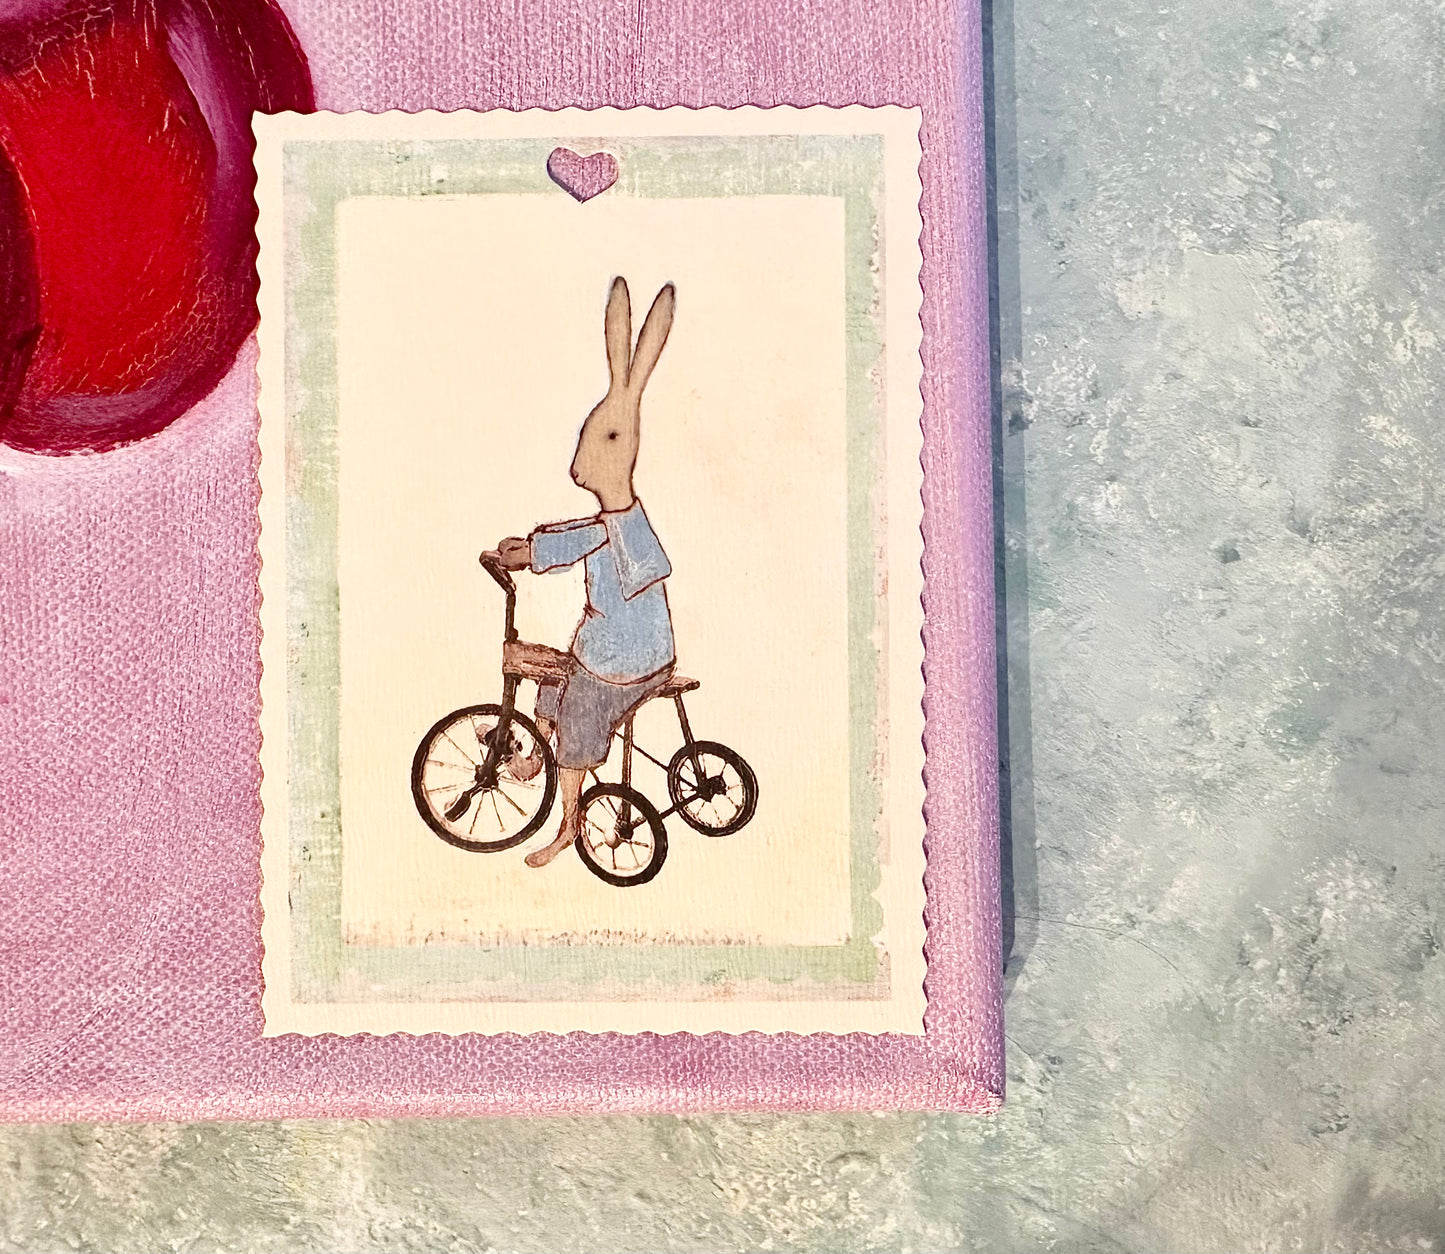 Mini Card "Rabbit Boy on Bike" - 2010